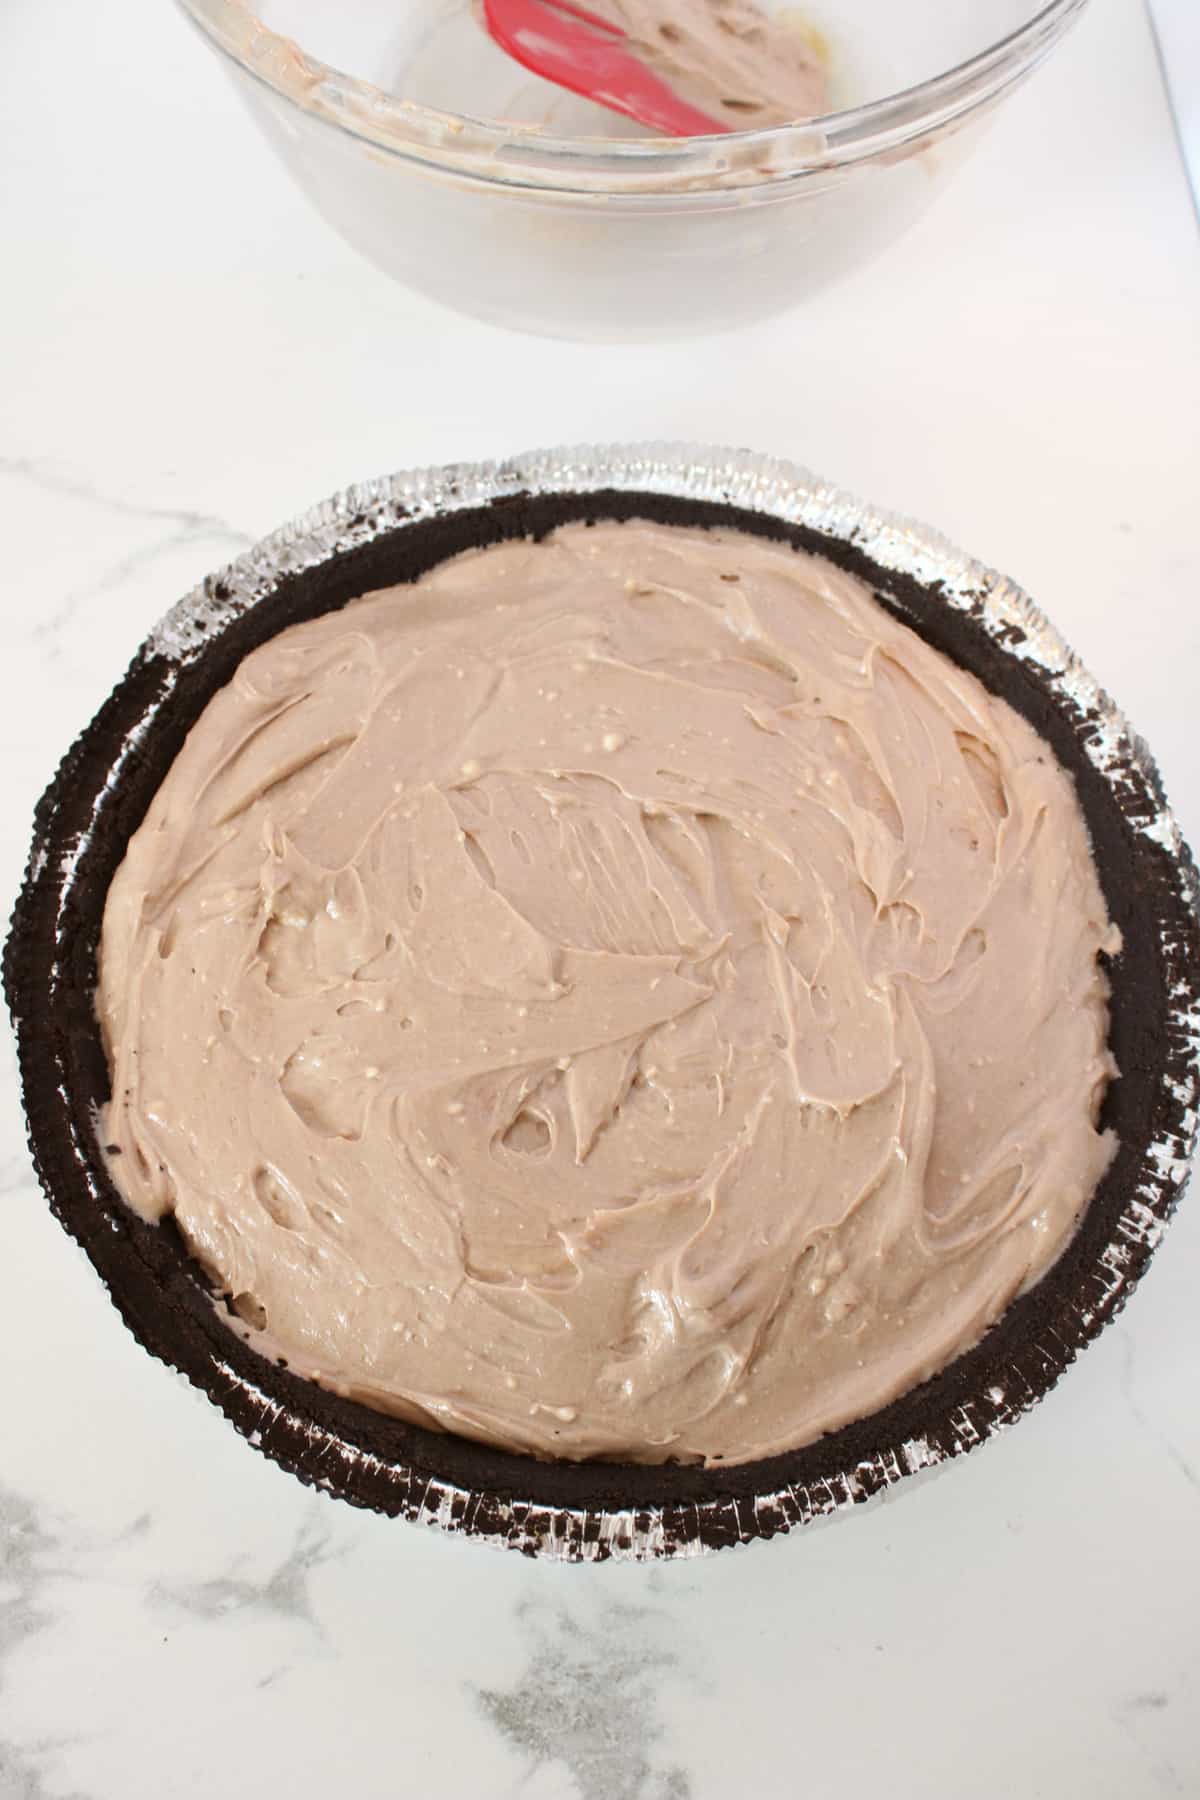 Chocolate pie in Oreo pie crust.